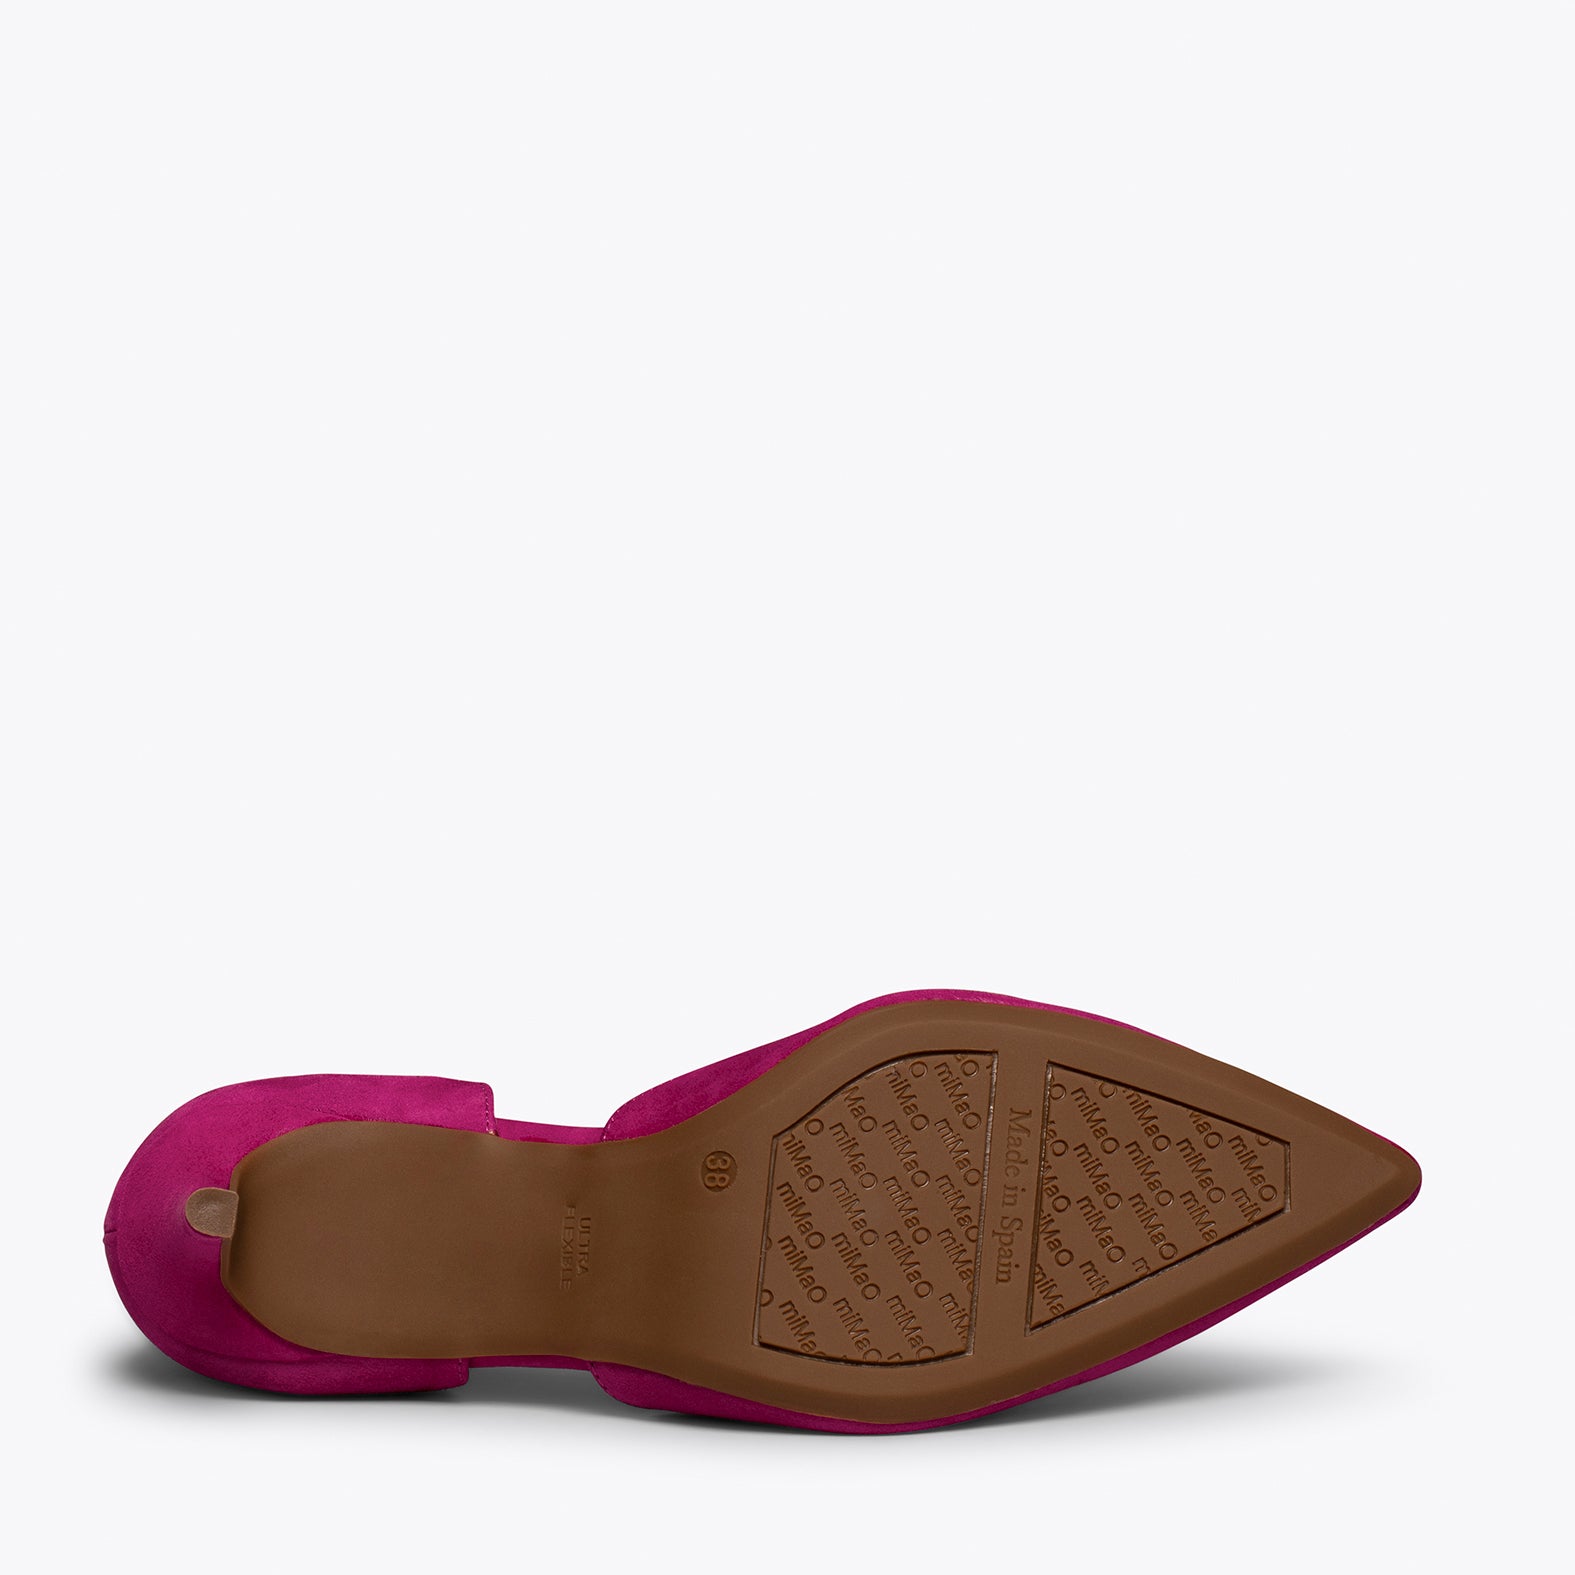 COCKTAIL – PINK elegant mid heel shoes